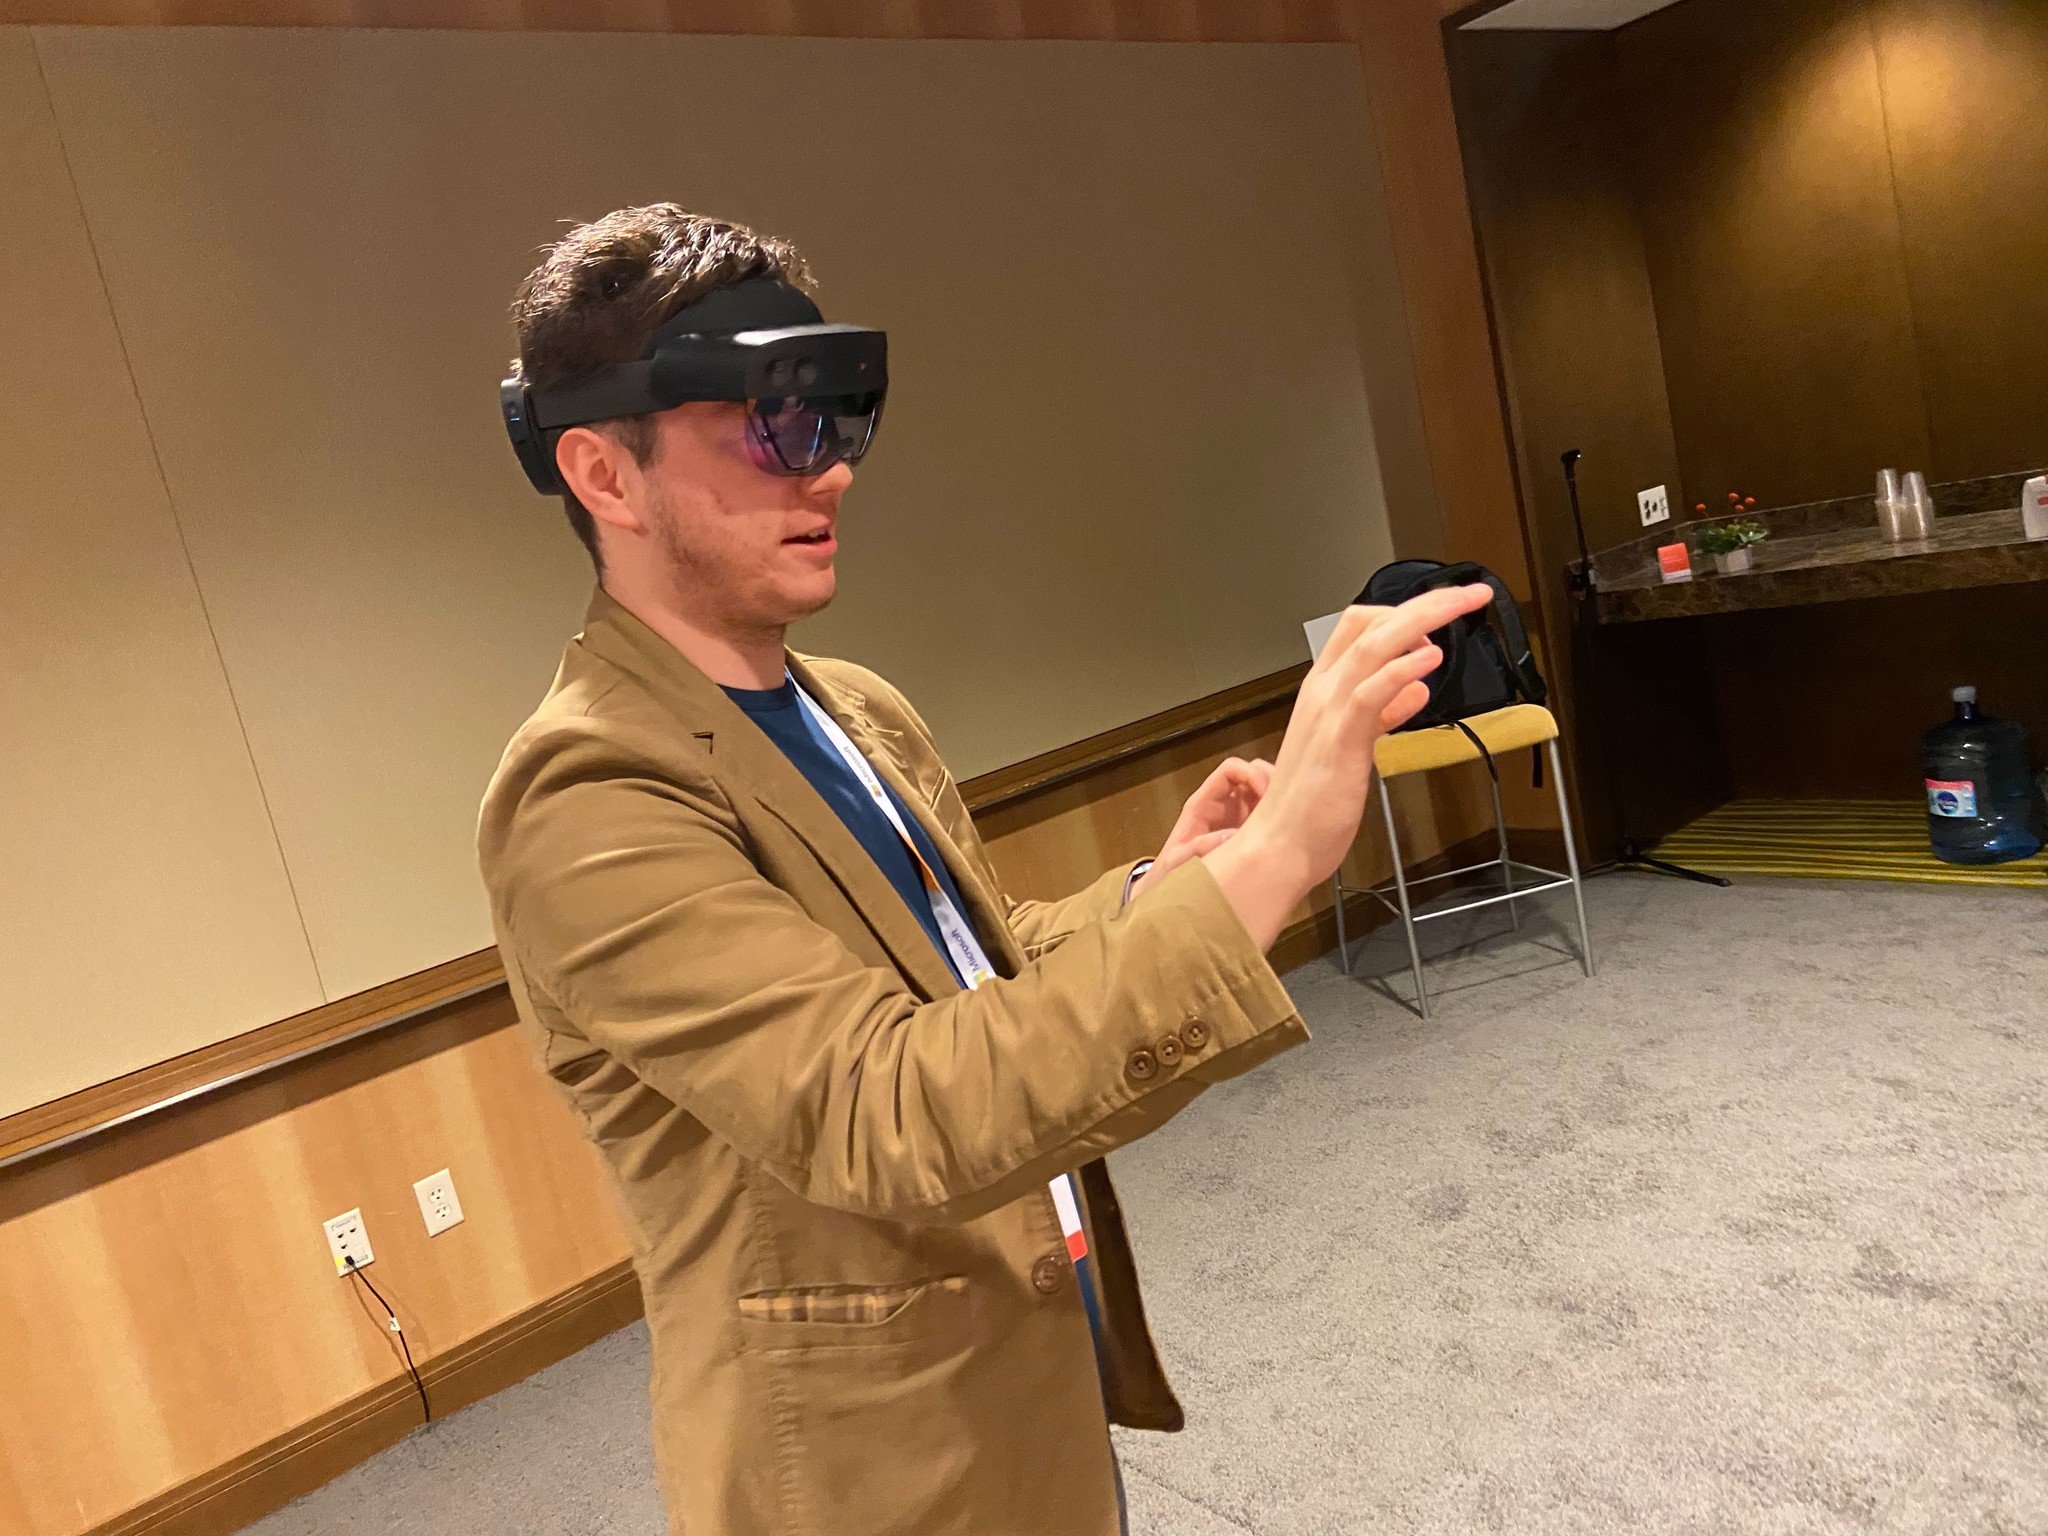 Man wearing HoloLens 2